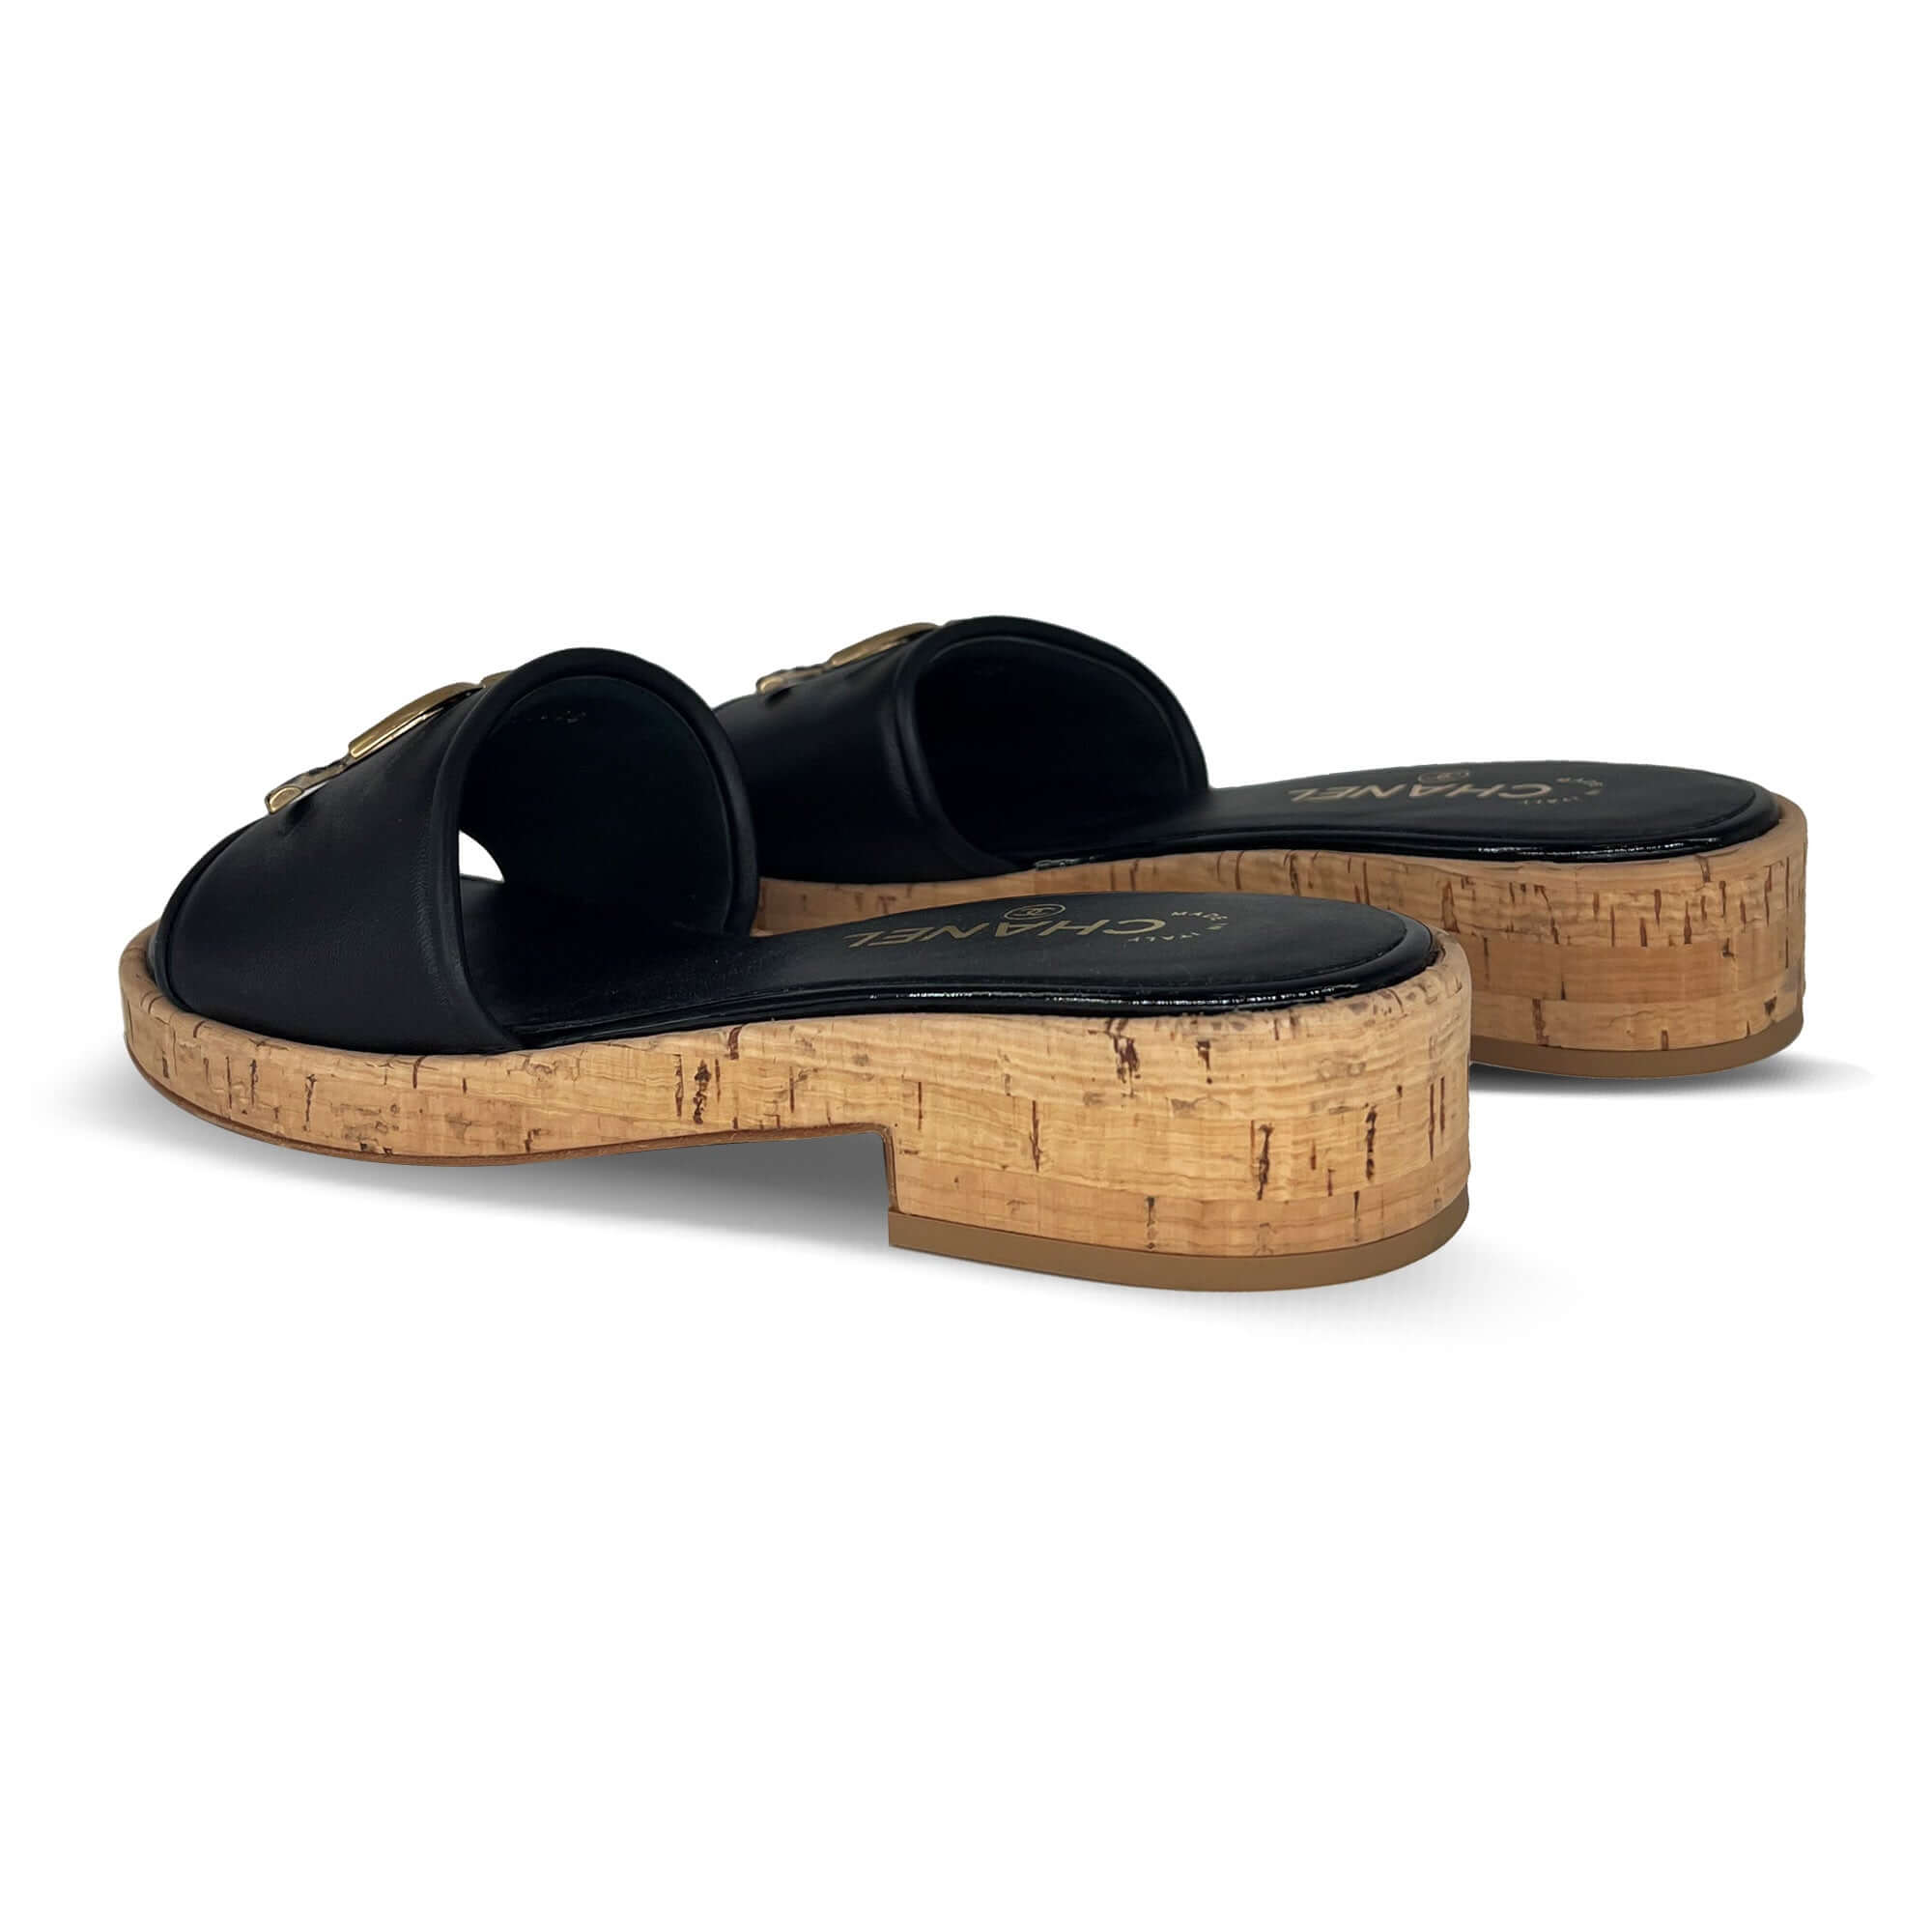 Chanel gold logo mules sandals black lambskin leather/cork